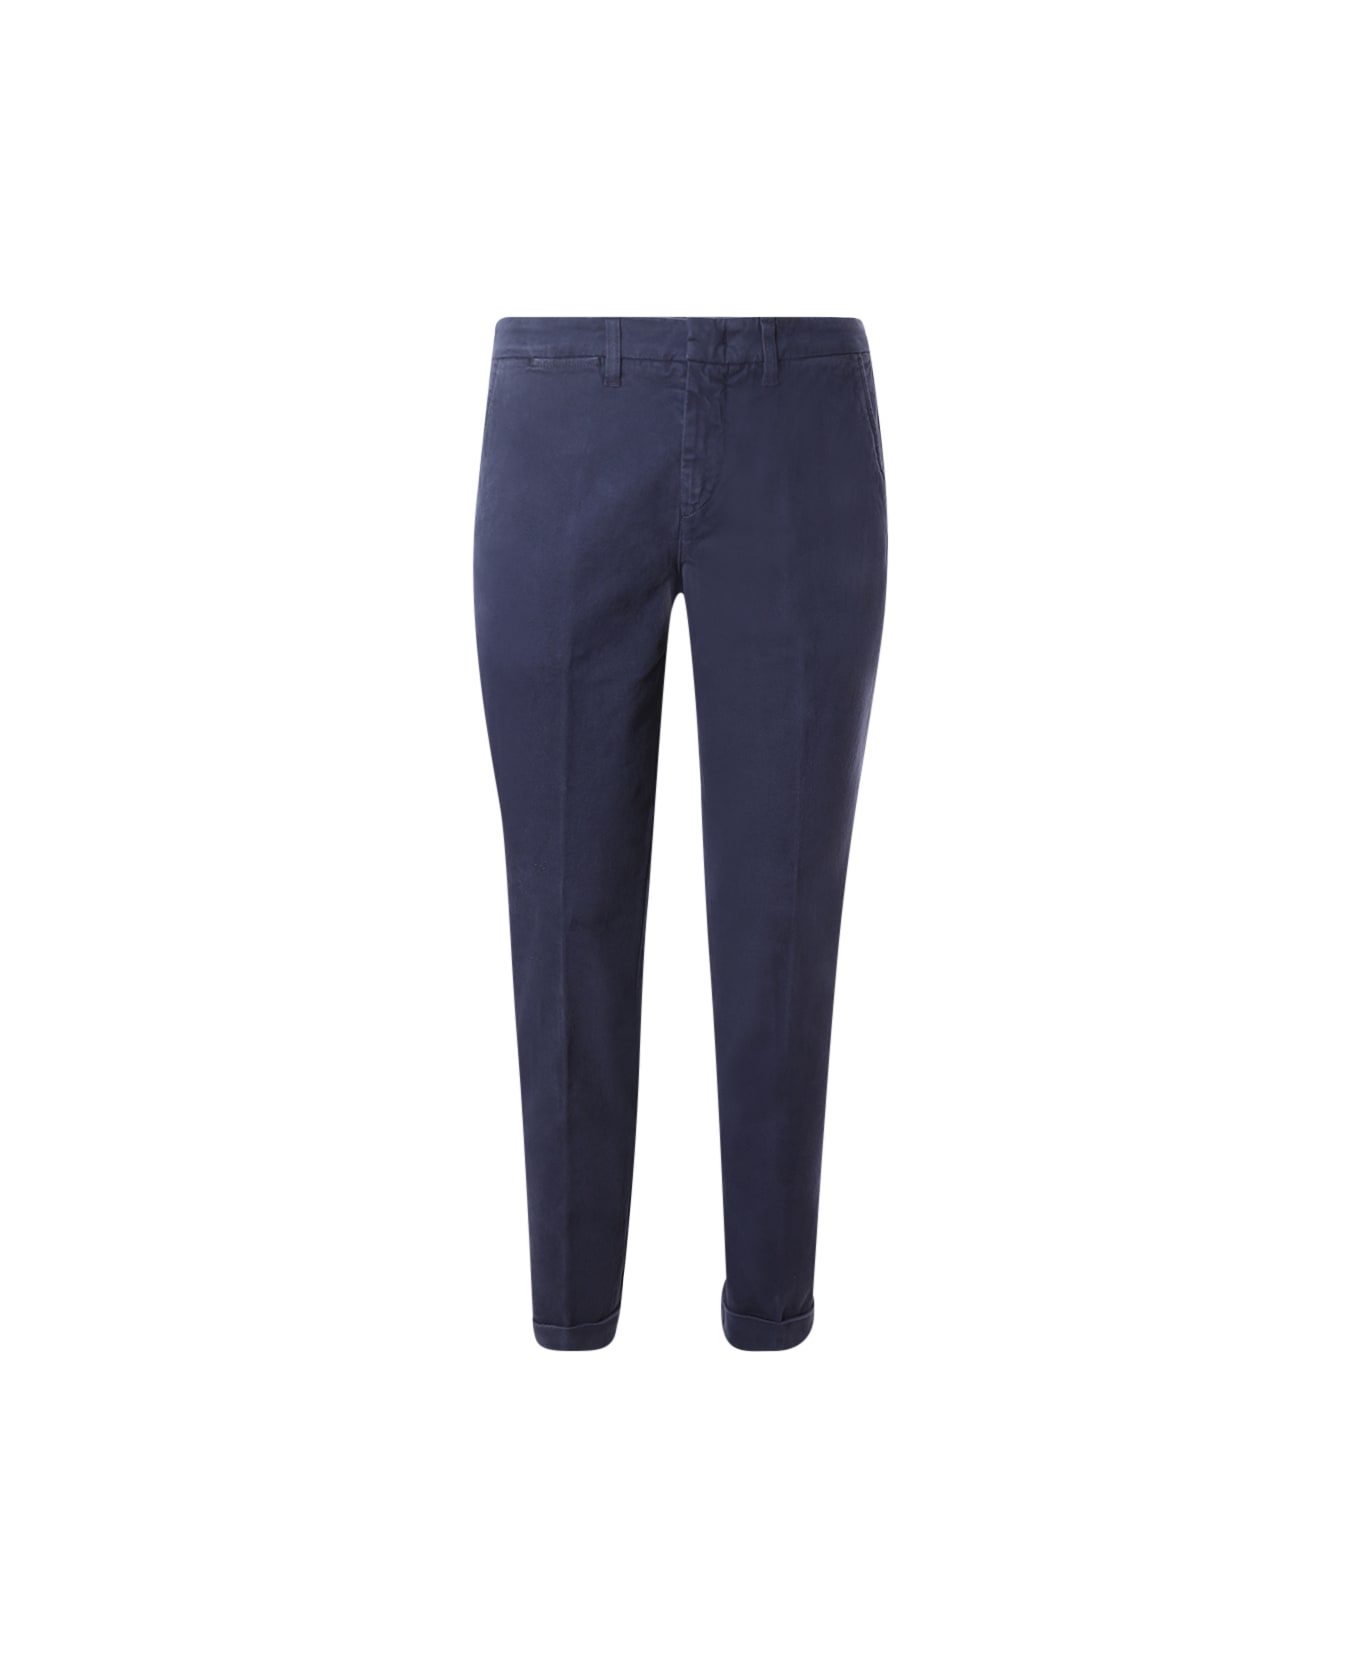 Fay Navy Blue Capri Cotton Trousers Pants - Blue